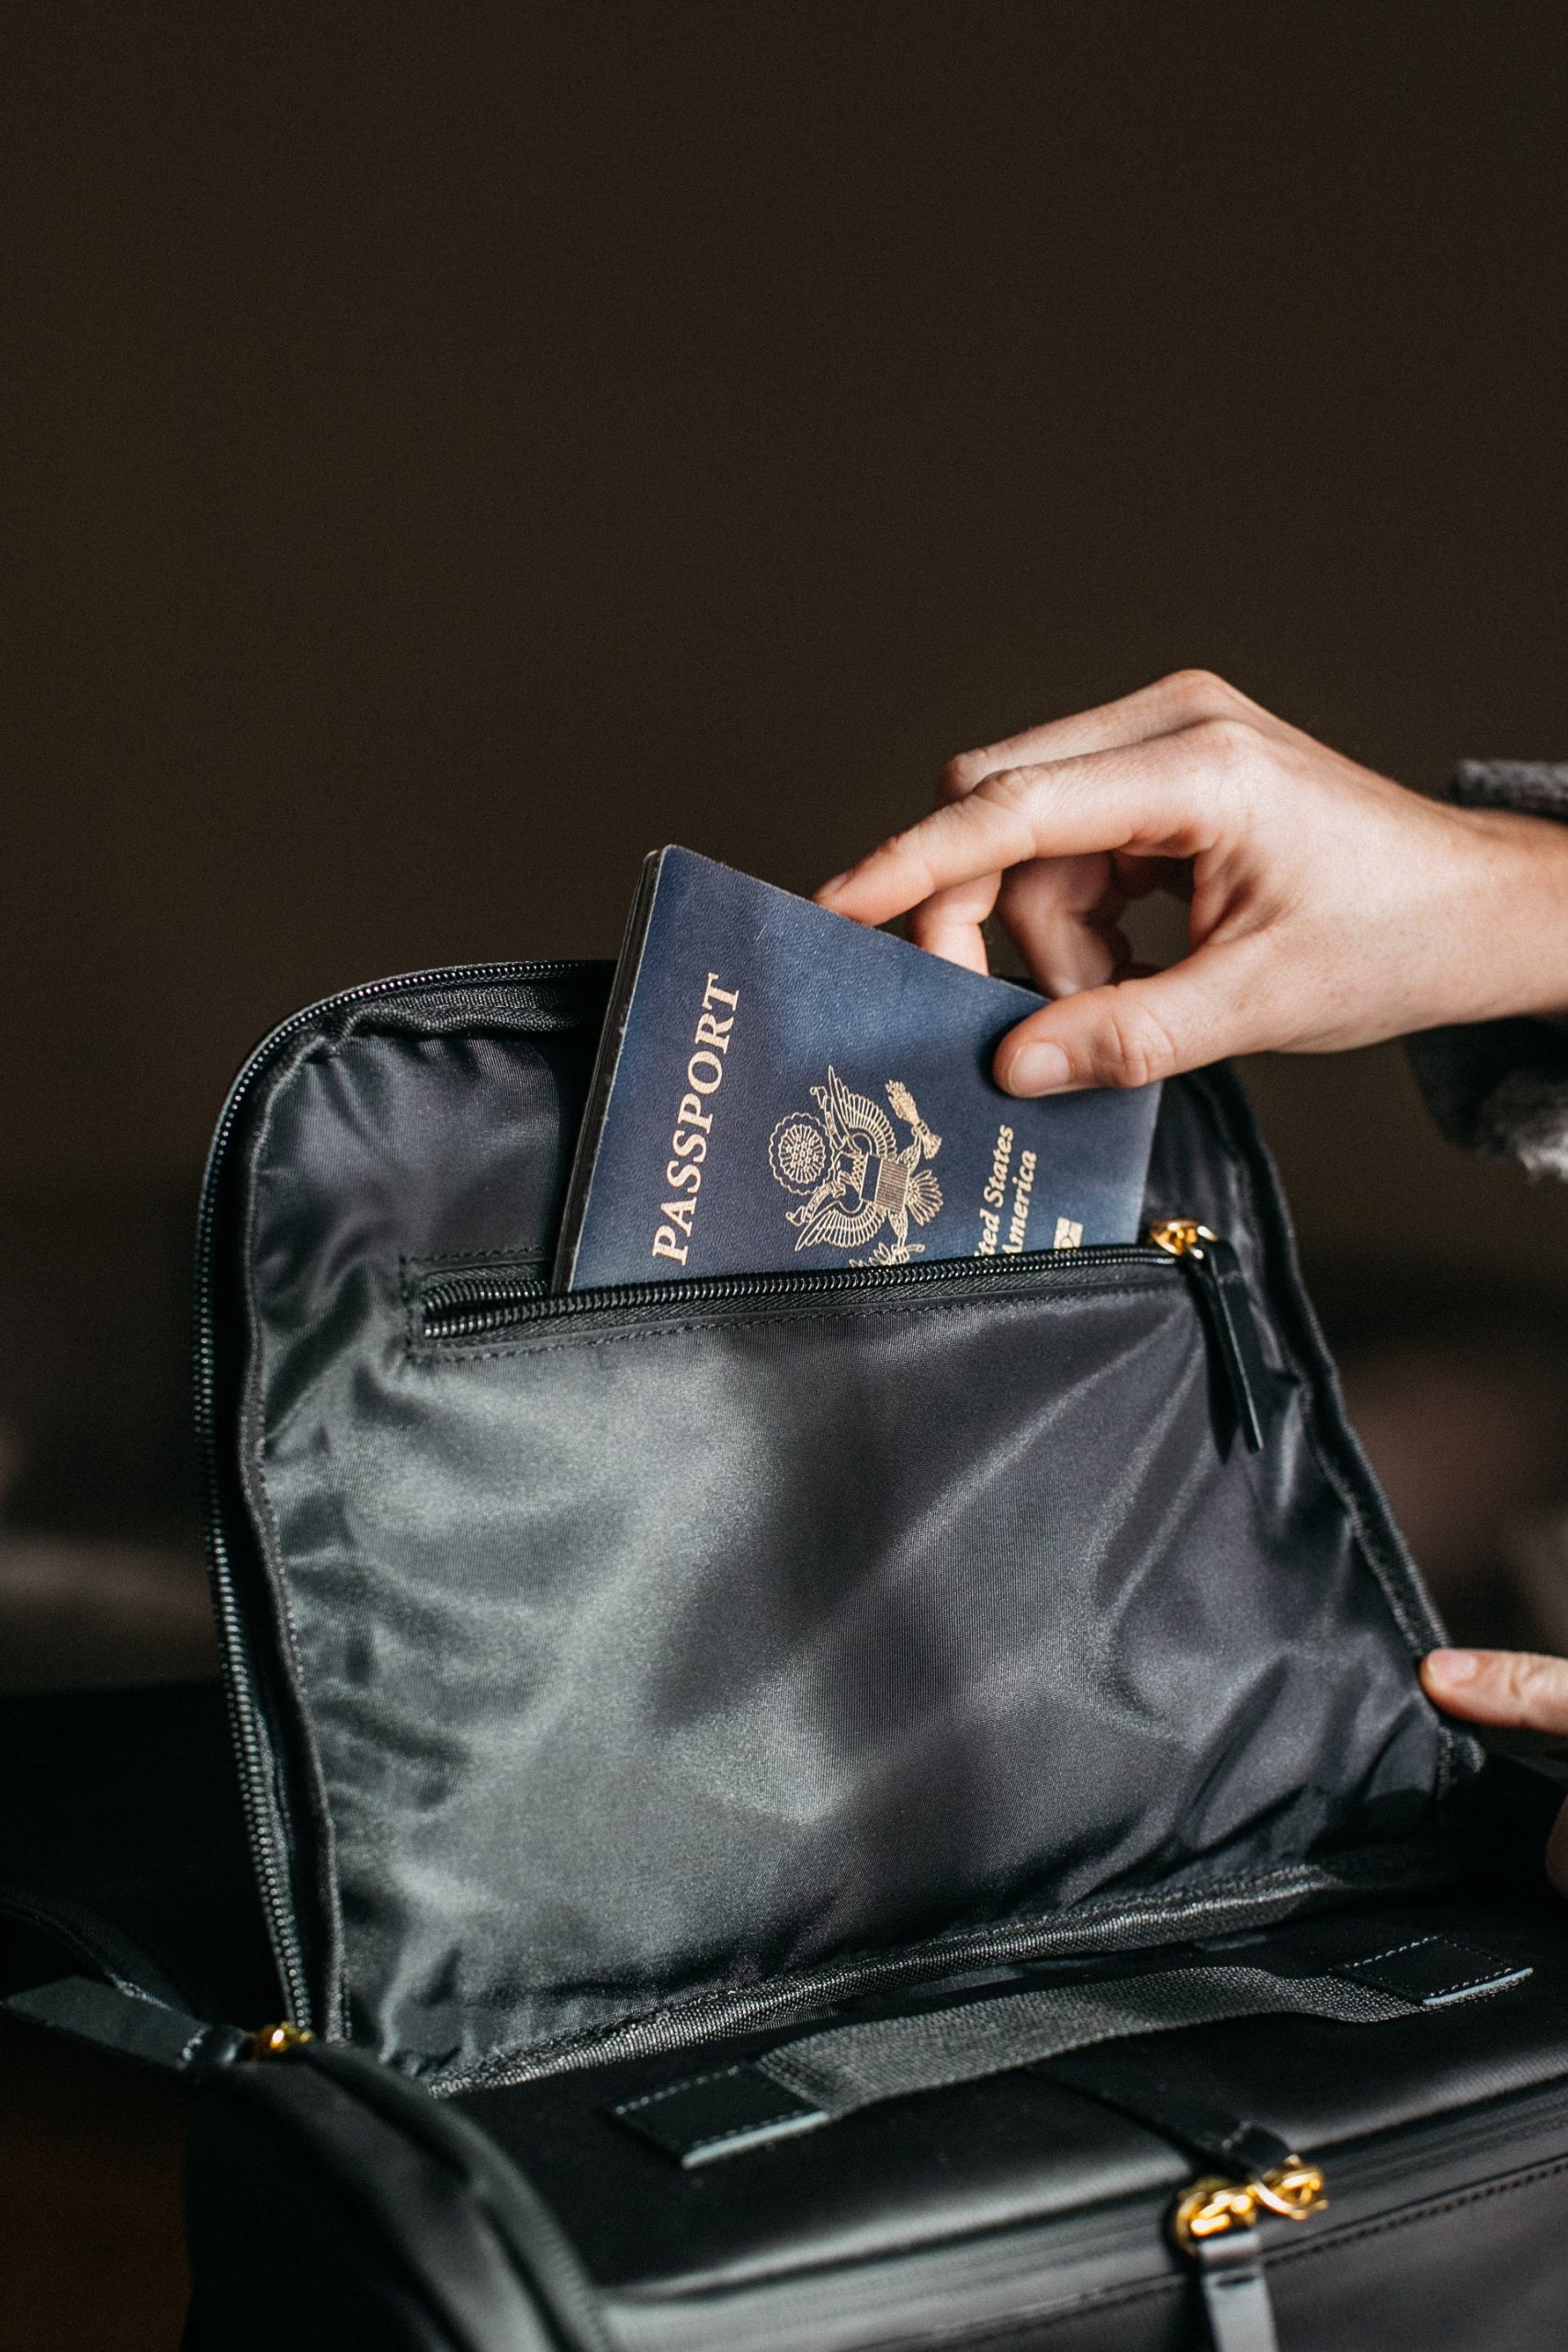 Passport being put into a black bag